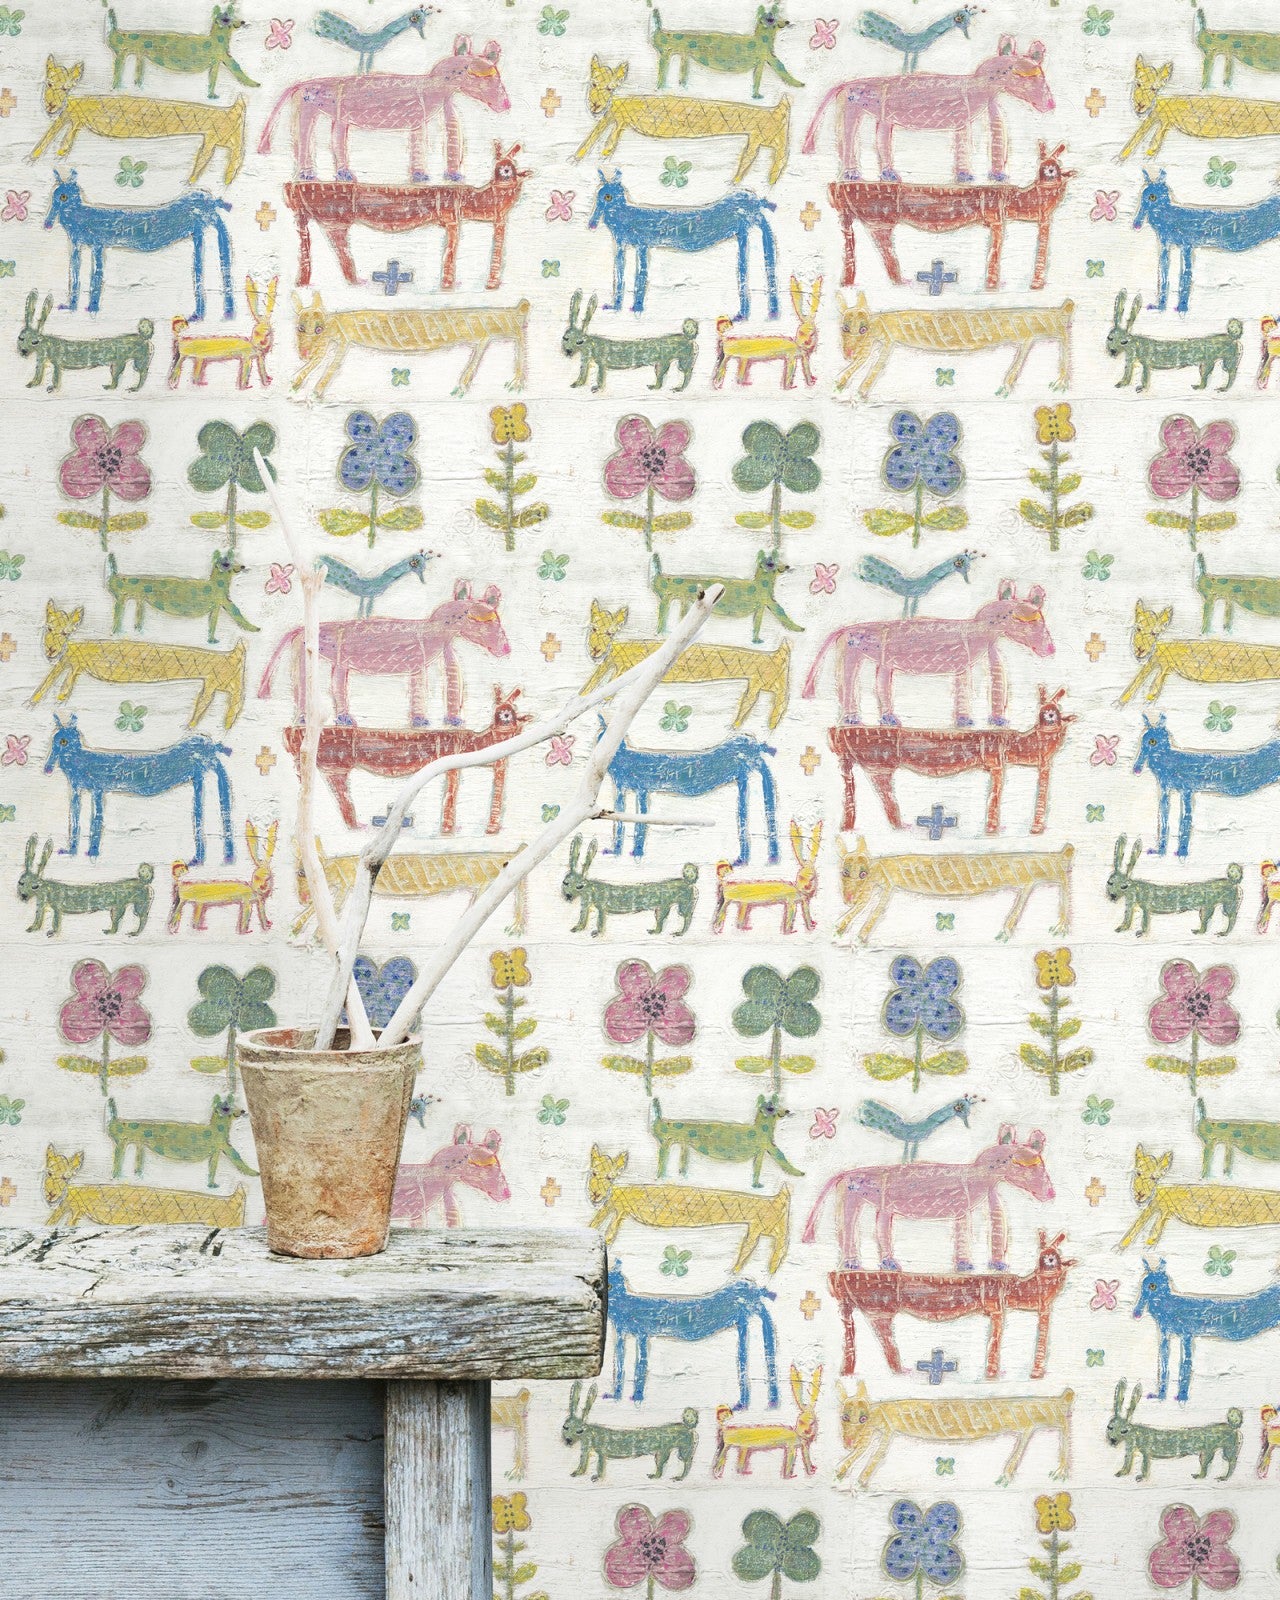 Stacked Animals Nursery Room Wallpaper - Multicolor